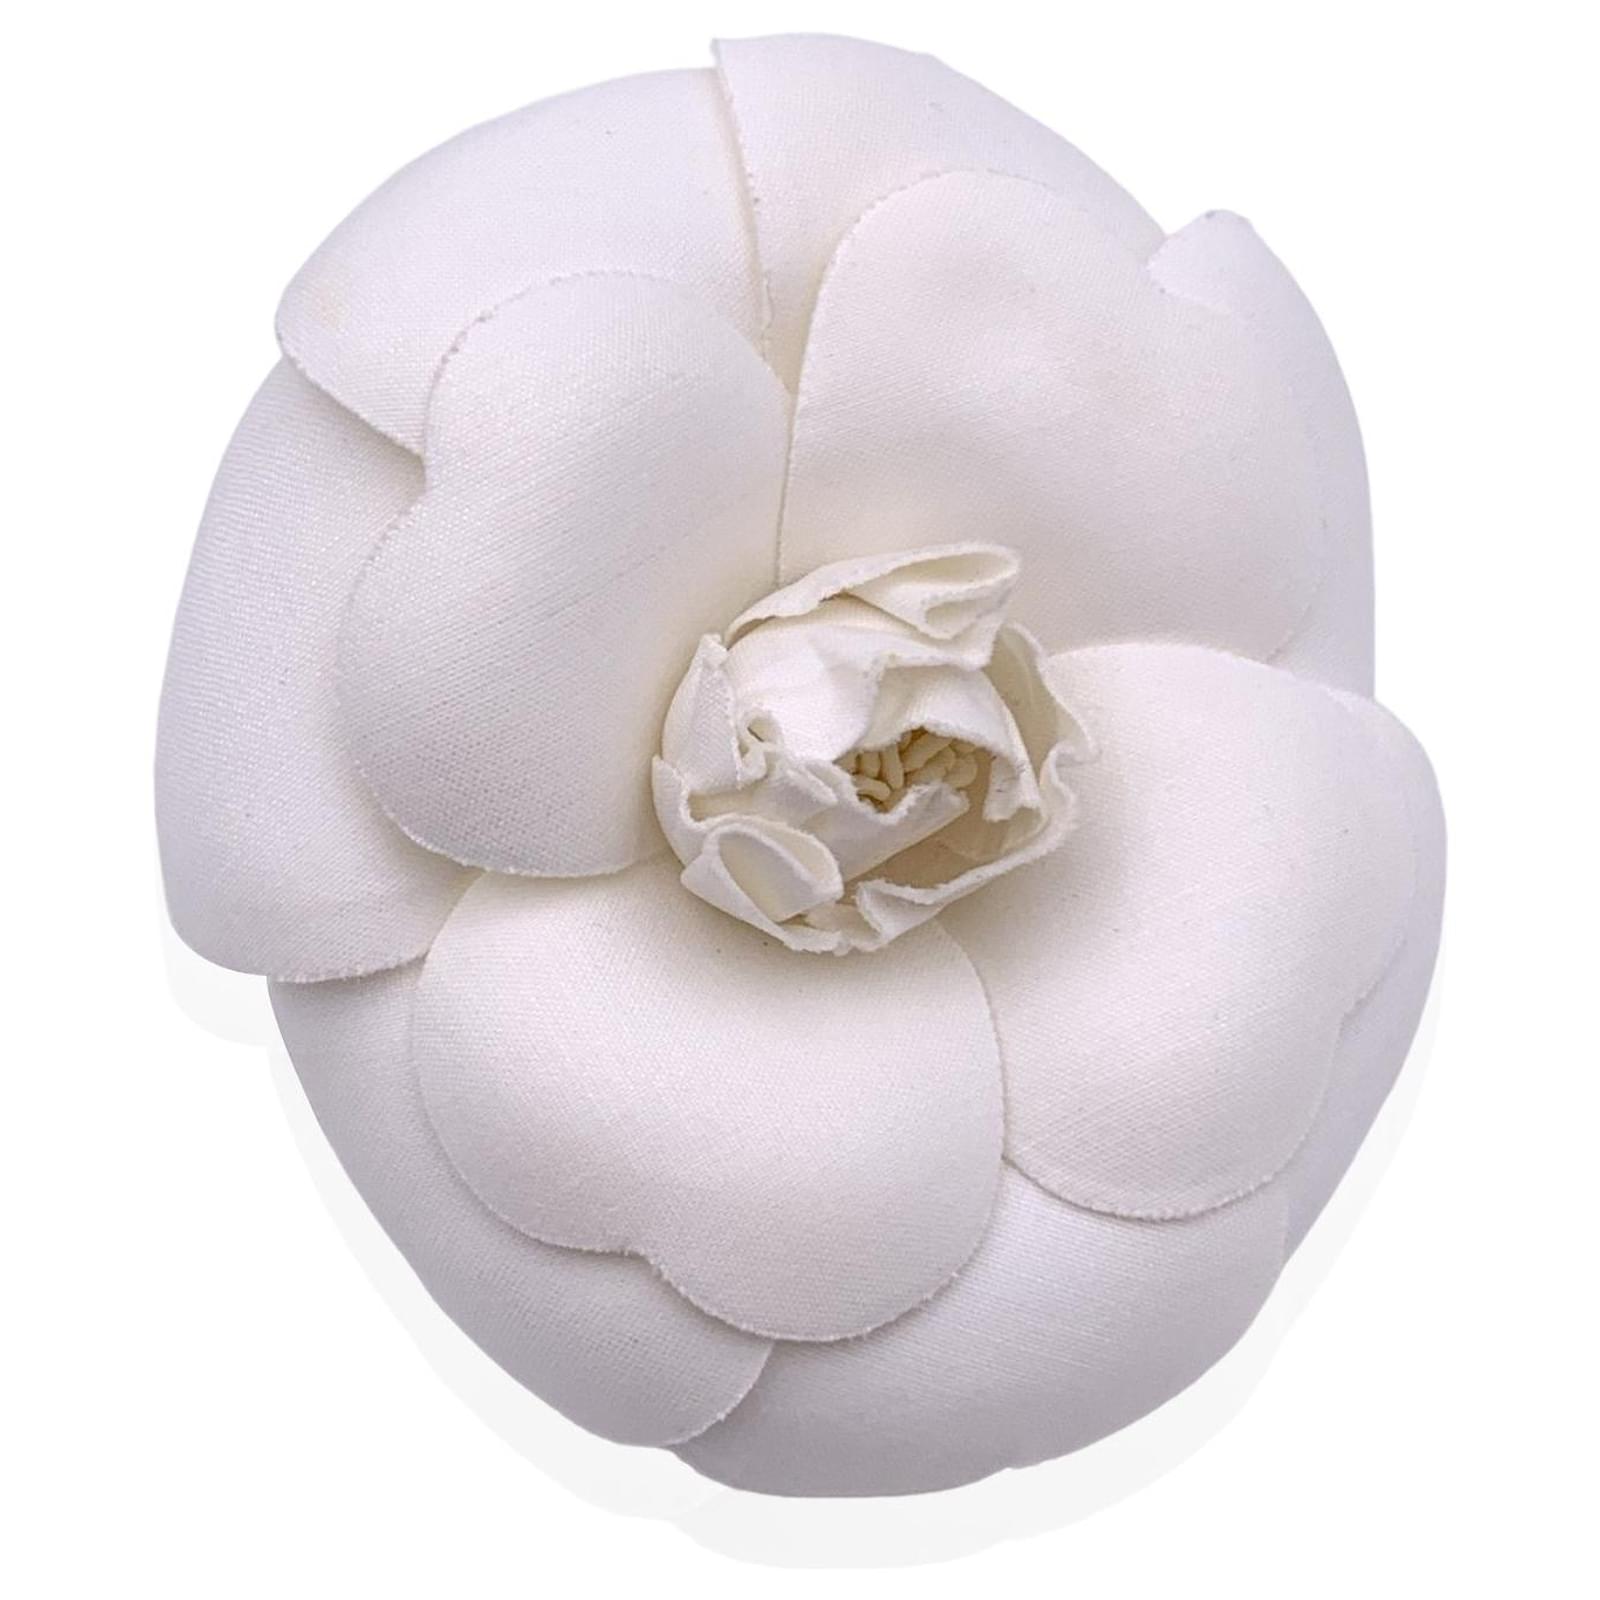 Vintage White Camelia Flower Camellia Brooch Pin